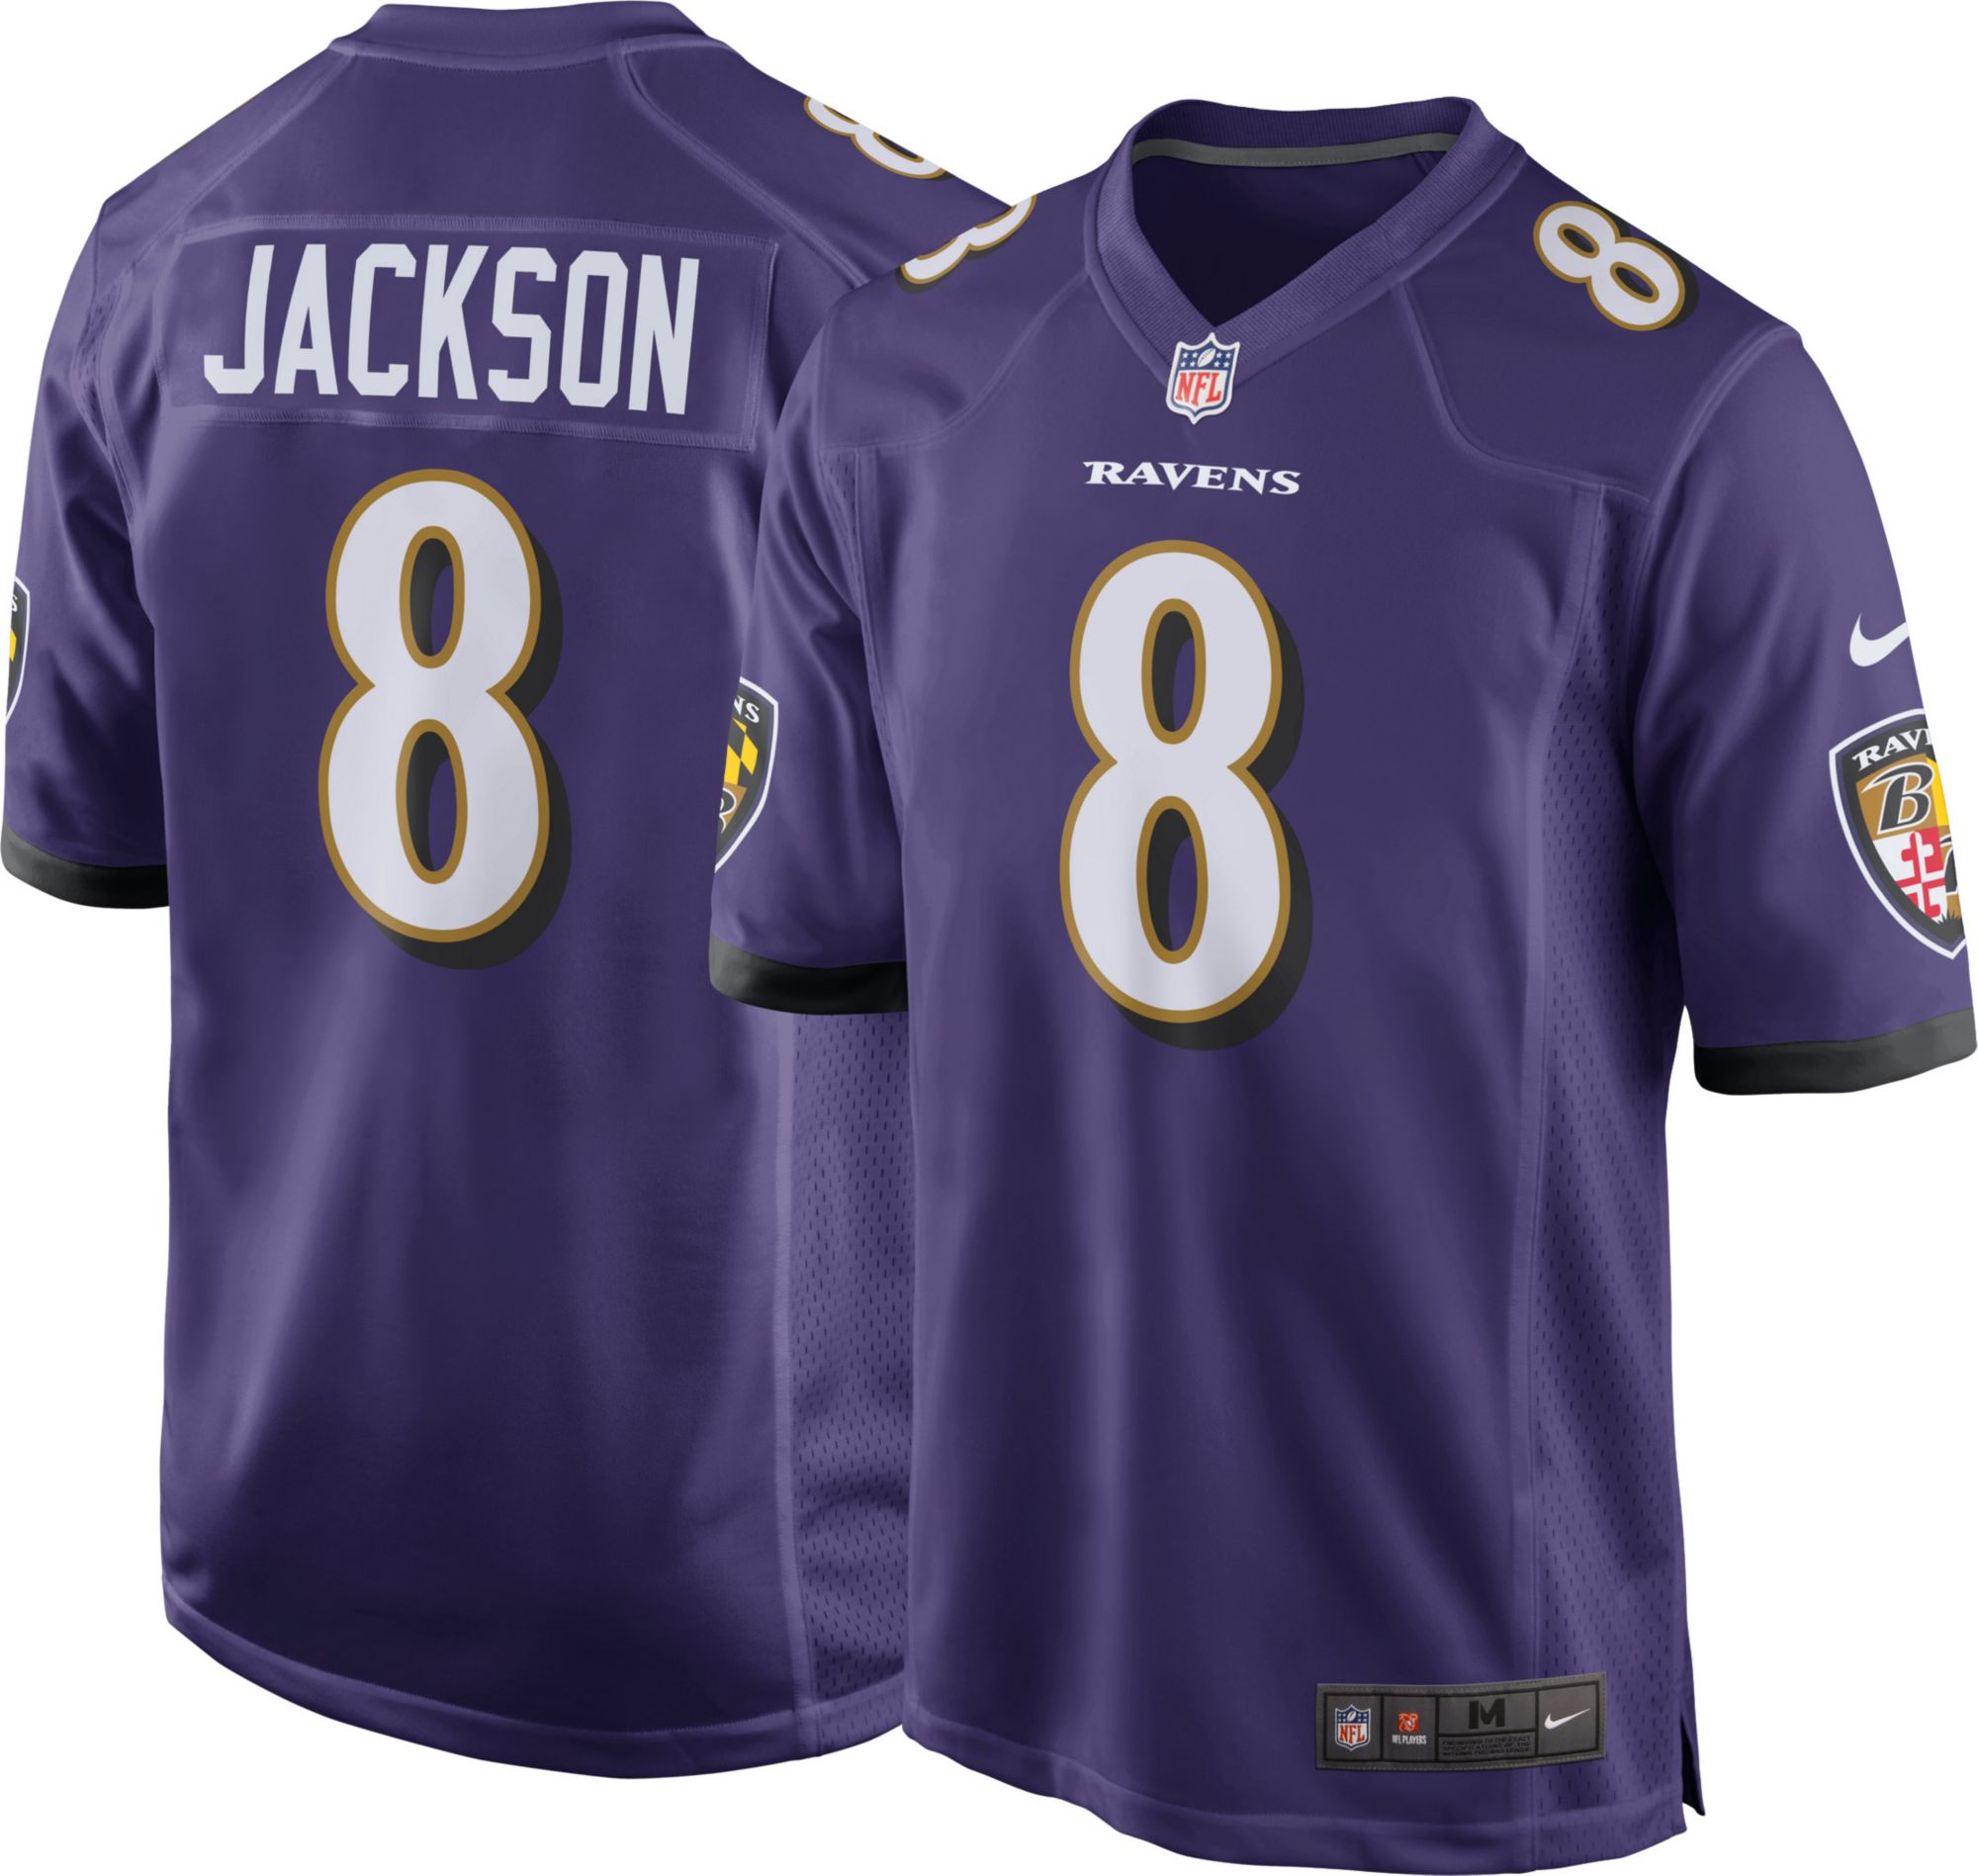 Baltimore Ravens Jerseys | Curbside 